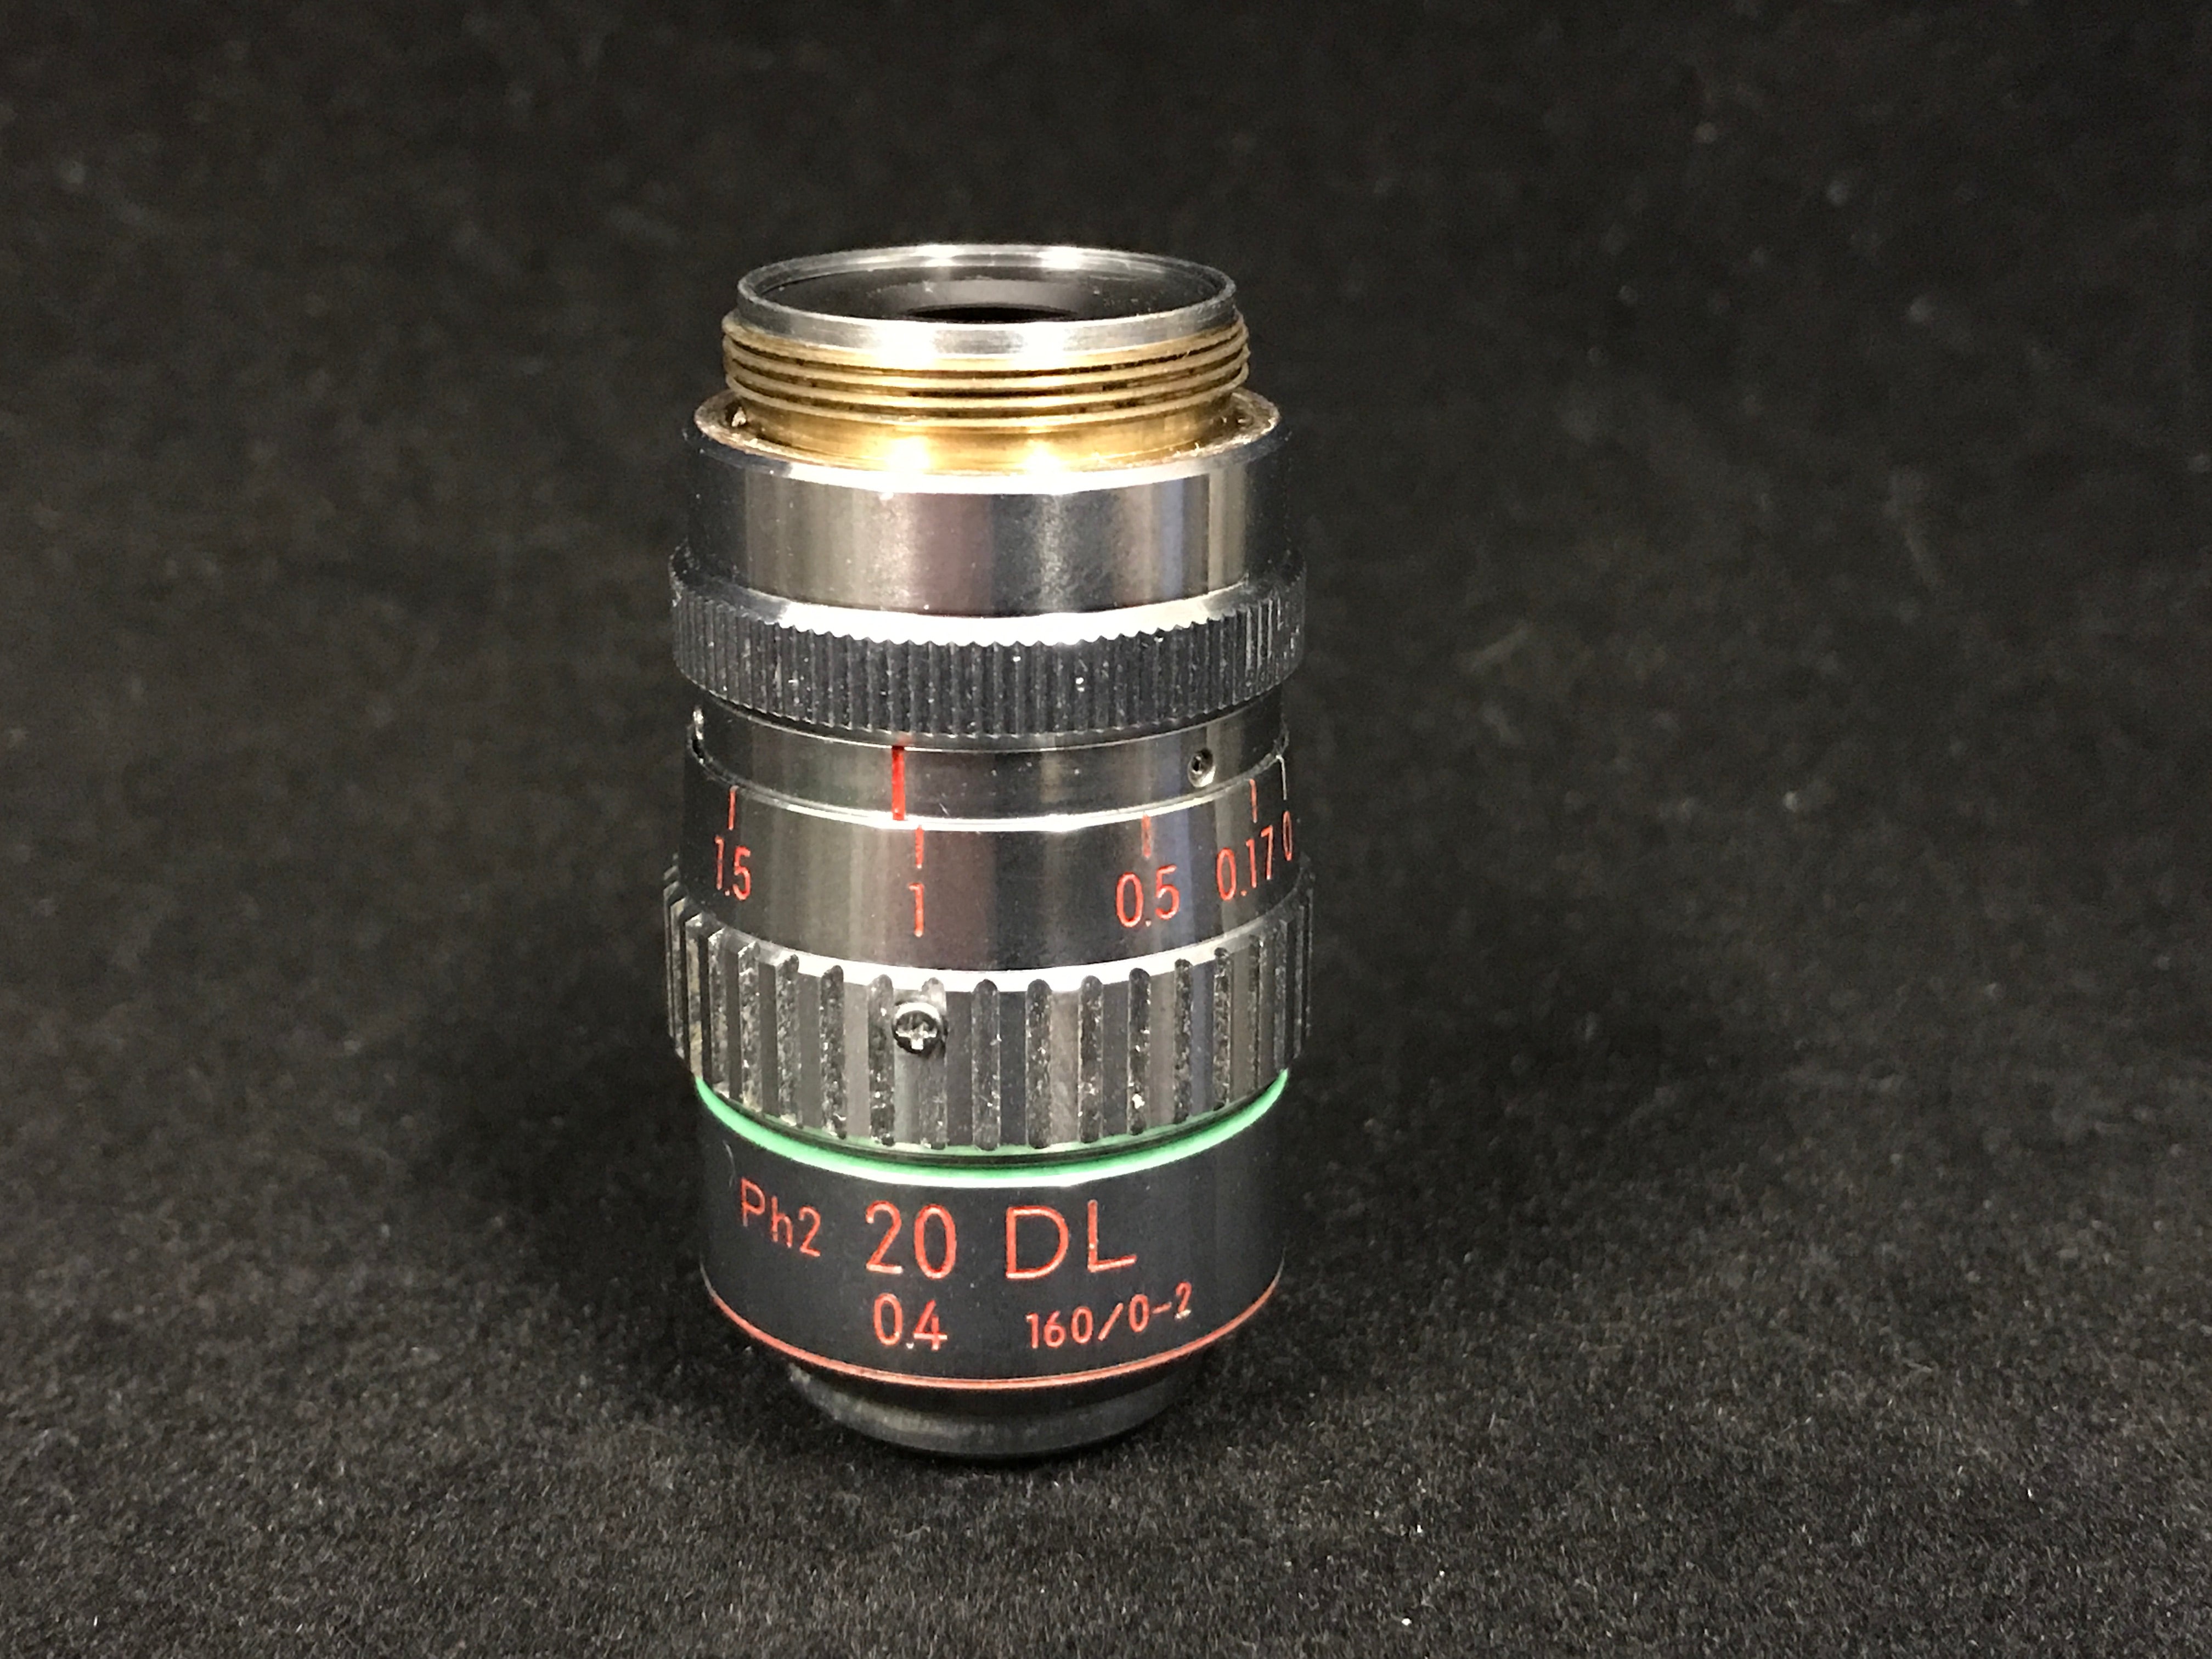 Nikon Ph2 20 DL 0.4 160/0-2 20x Phase Contrast Microscope Objective